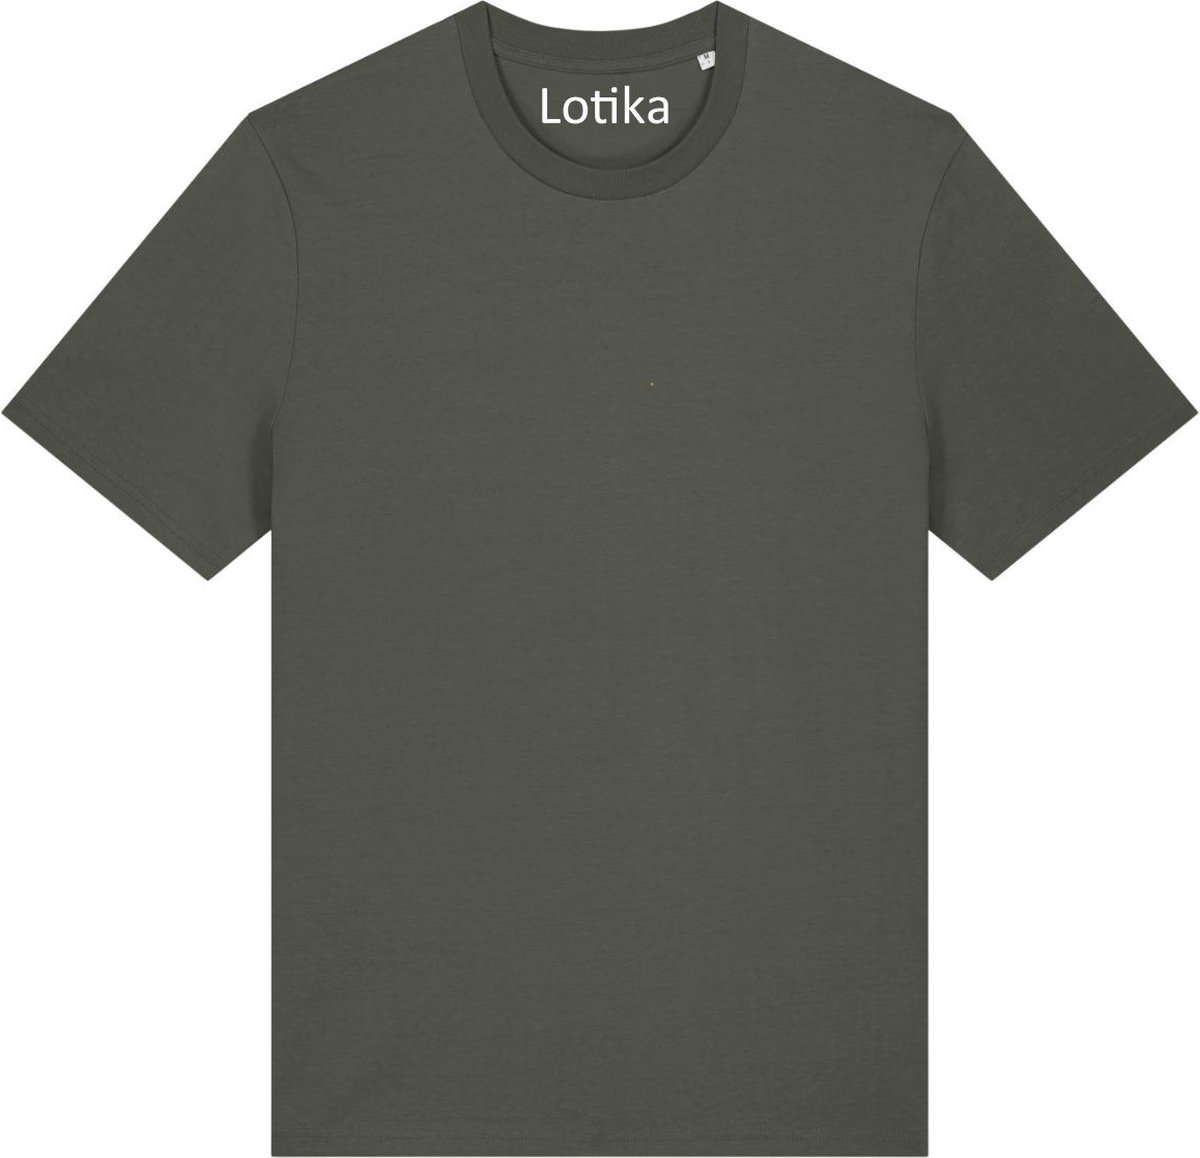 Lotika - Juul T-shirt biologisch katoen - kaki